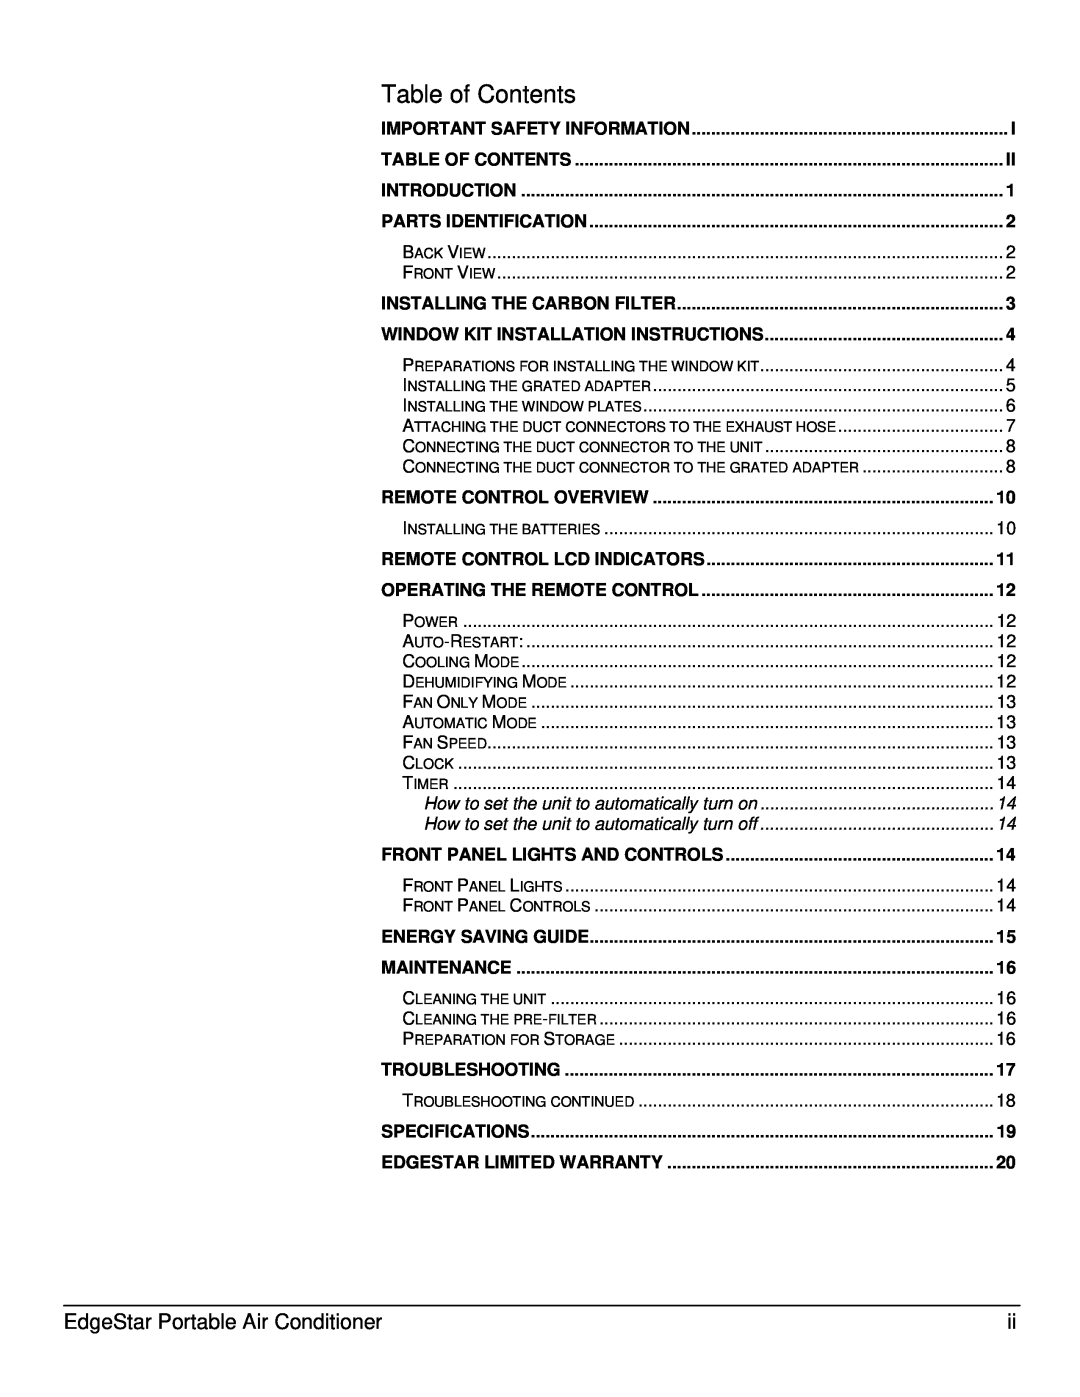 EdgeStar AP14009COM owner manual Table of Contents, EdgeStar Portable Air Conditioner 